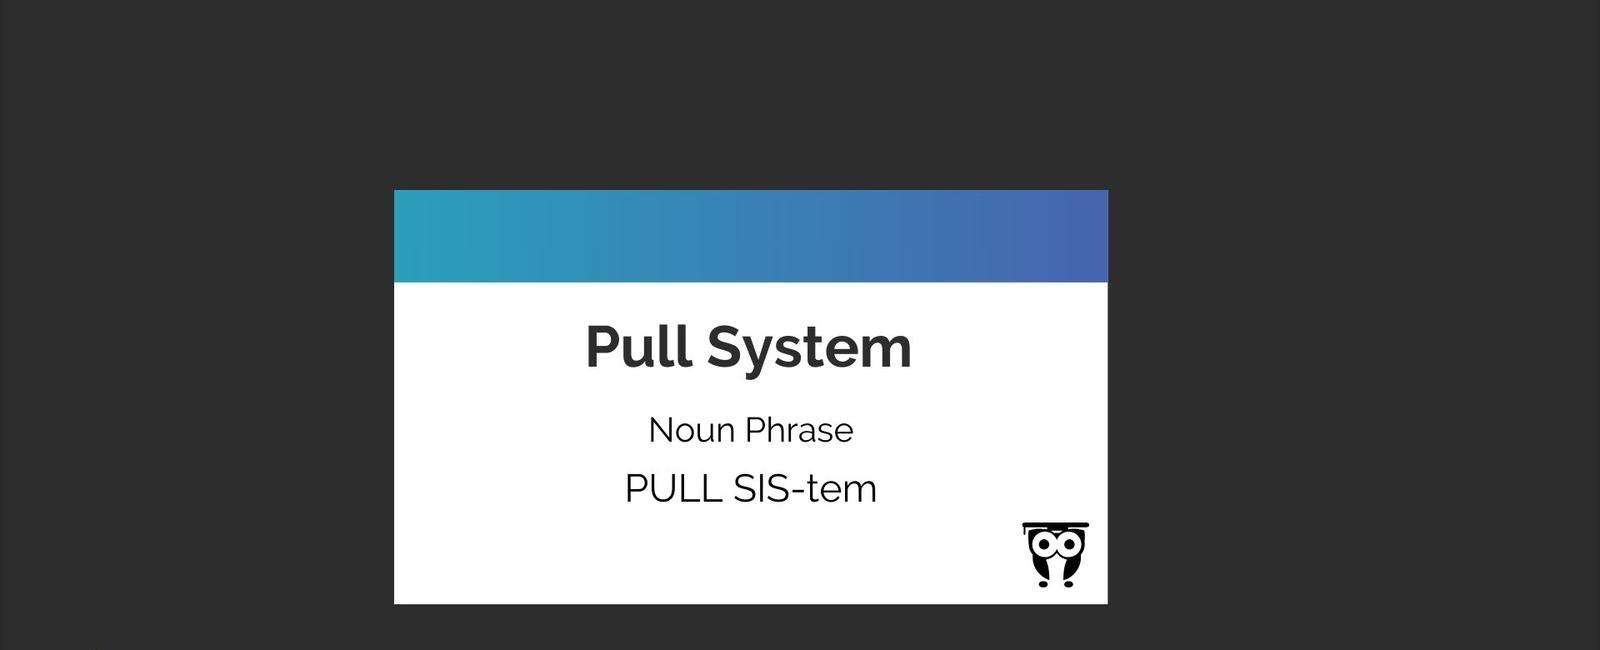 Pull System